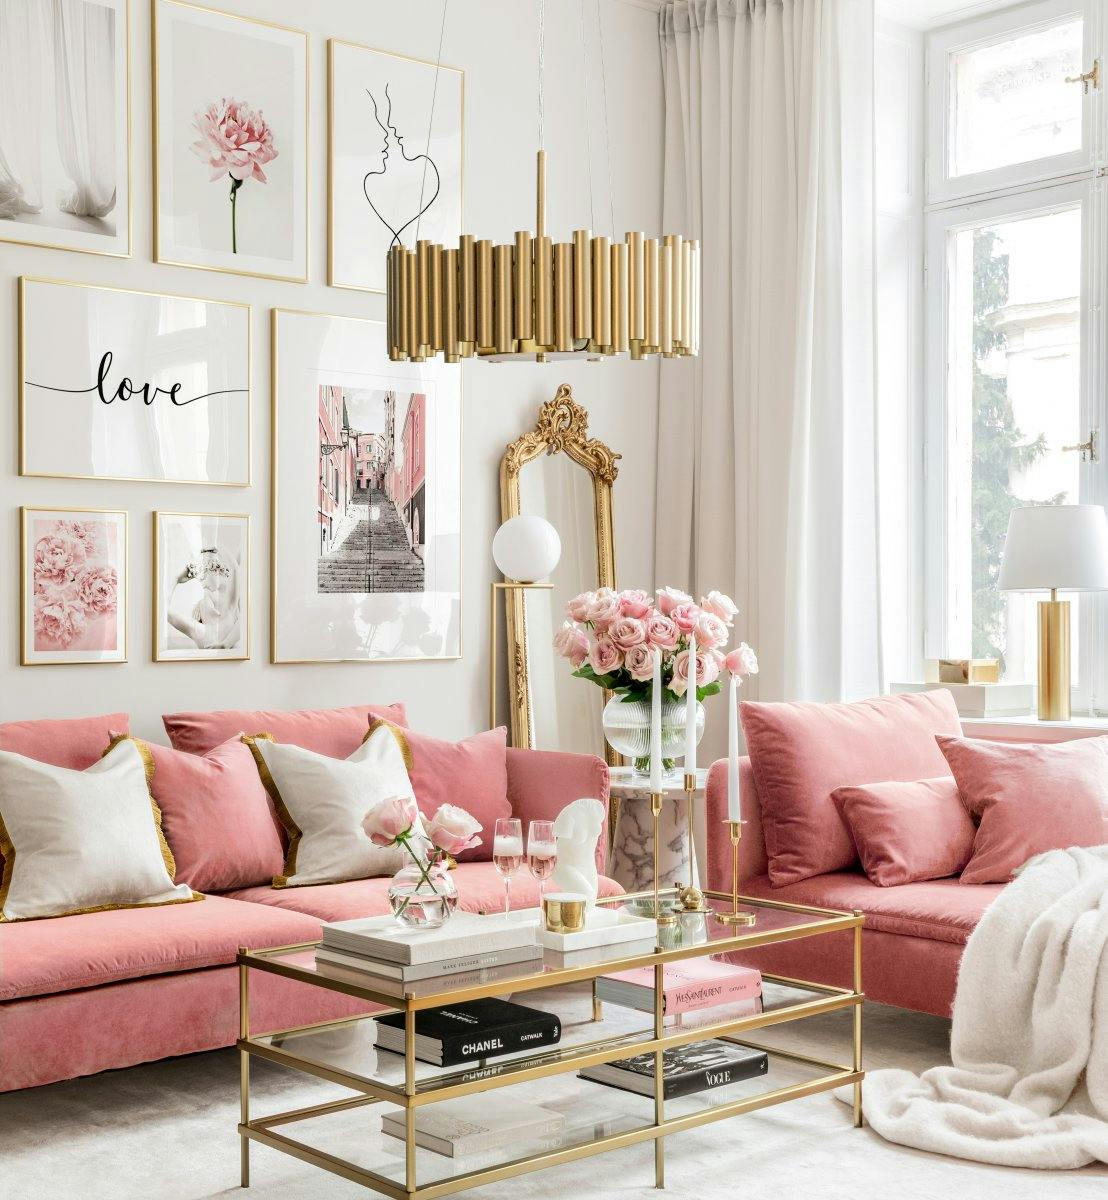 Decor roz sufragerie tablouri romantice rame aurii